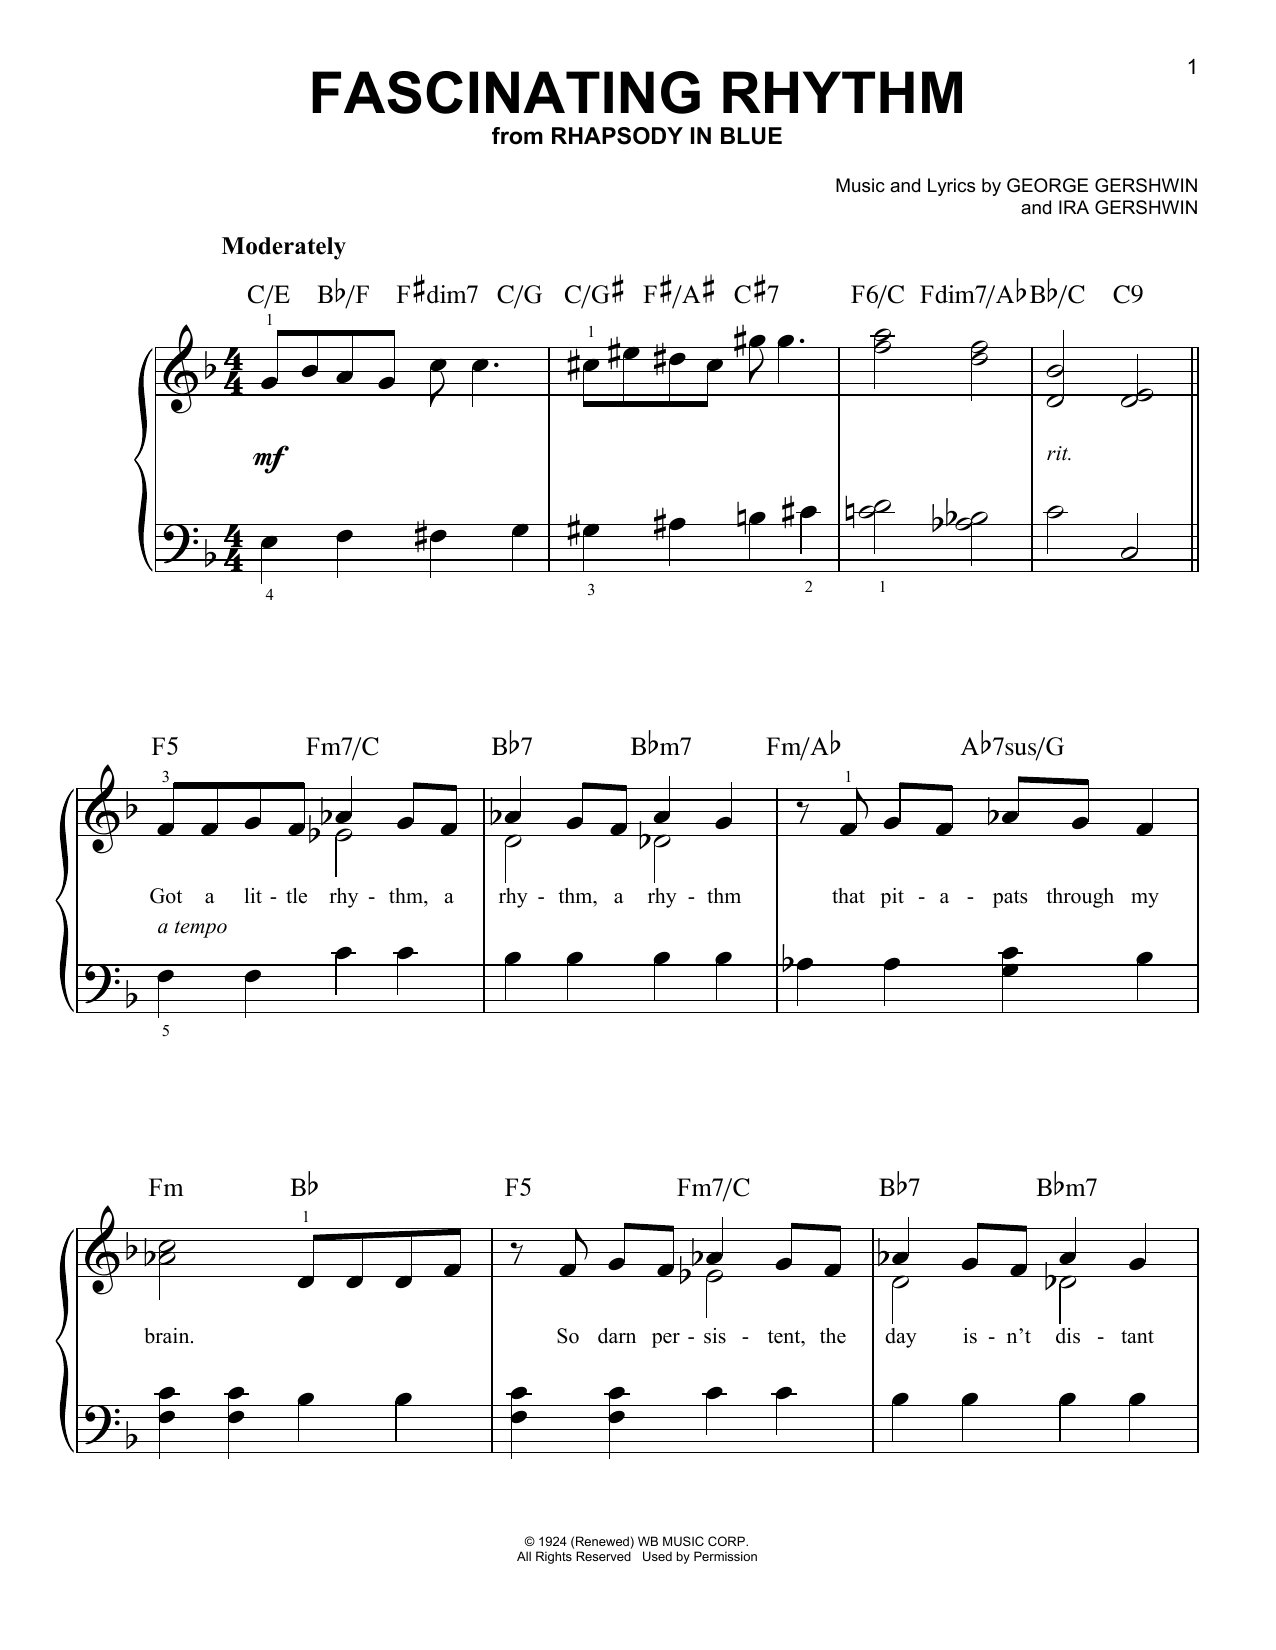 Vinicius De Moraes Fascinating Rhythm sheet music notes and chords. Download Printable PDF.